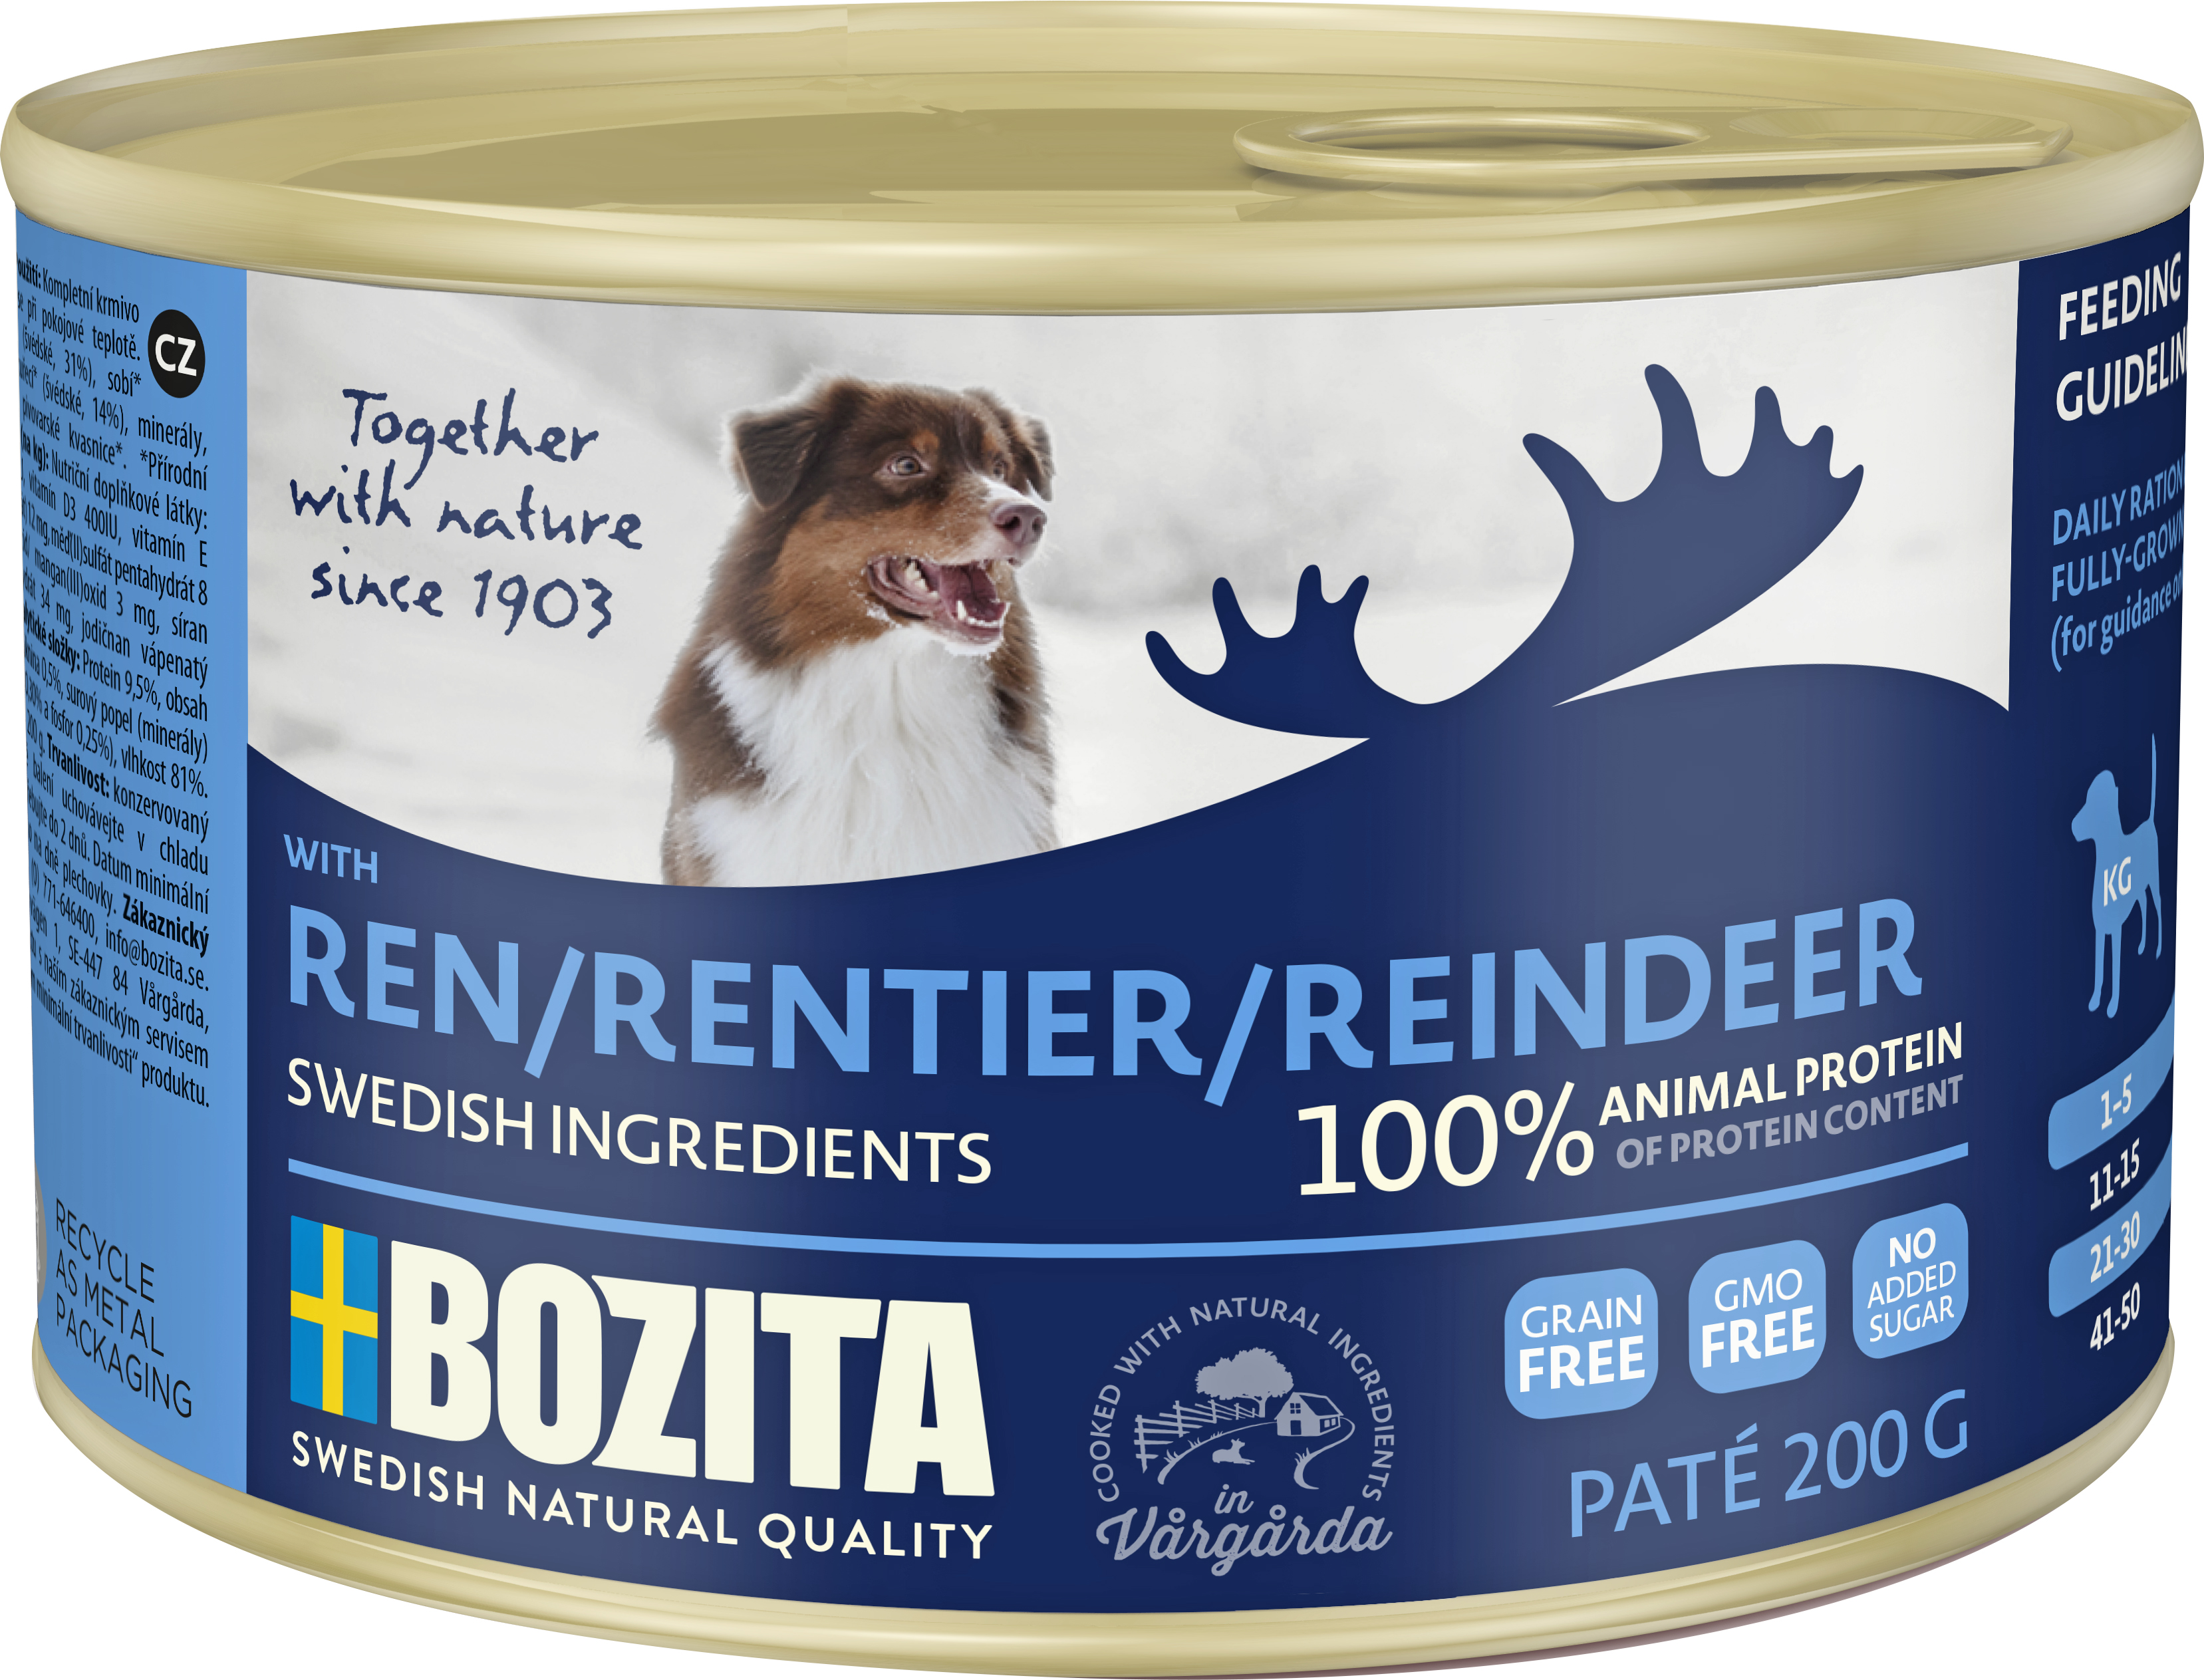 Hundfoder Bozita Paté Ren 200 g